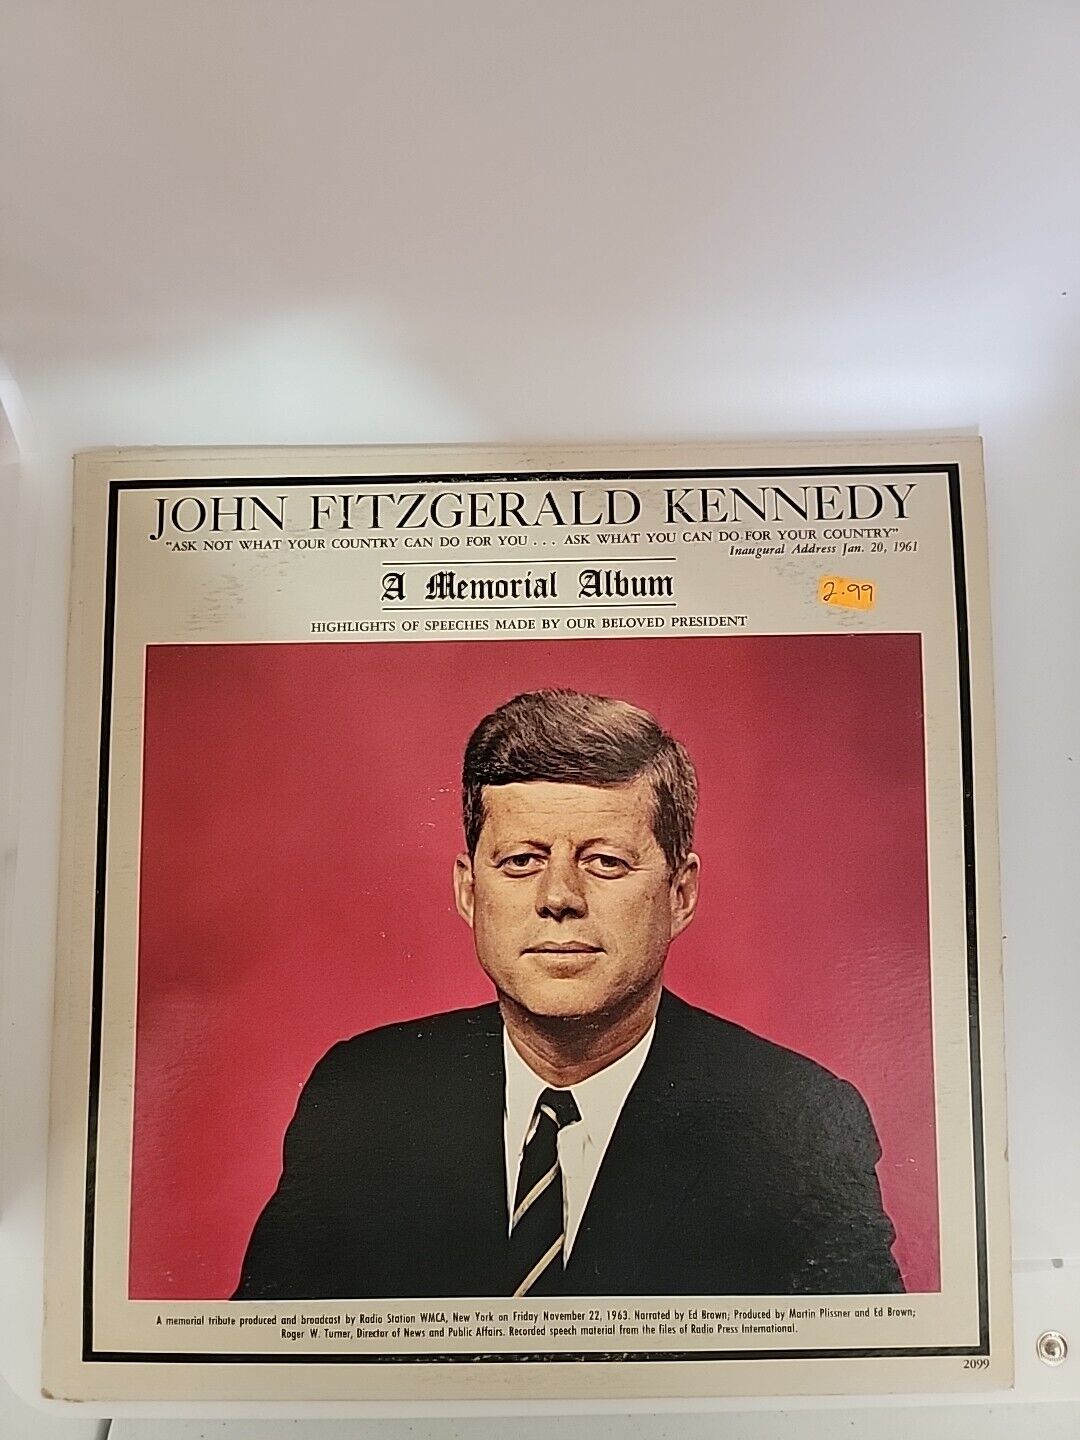 1963 JOHN FITZGERALD KENNEDY~A MEMORIAL ALBUM 33RPM Vinyl Record OF JFK SPEECHES